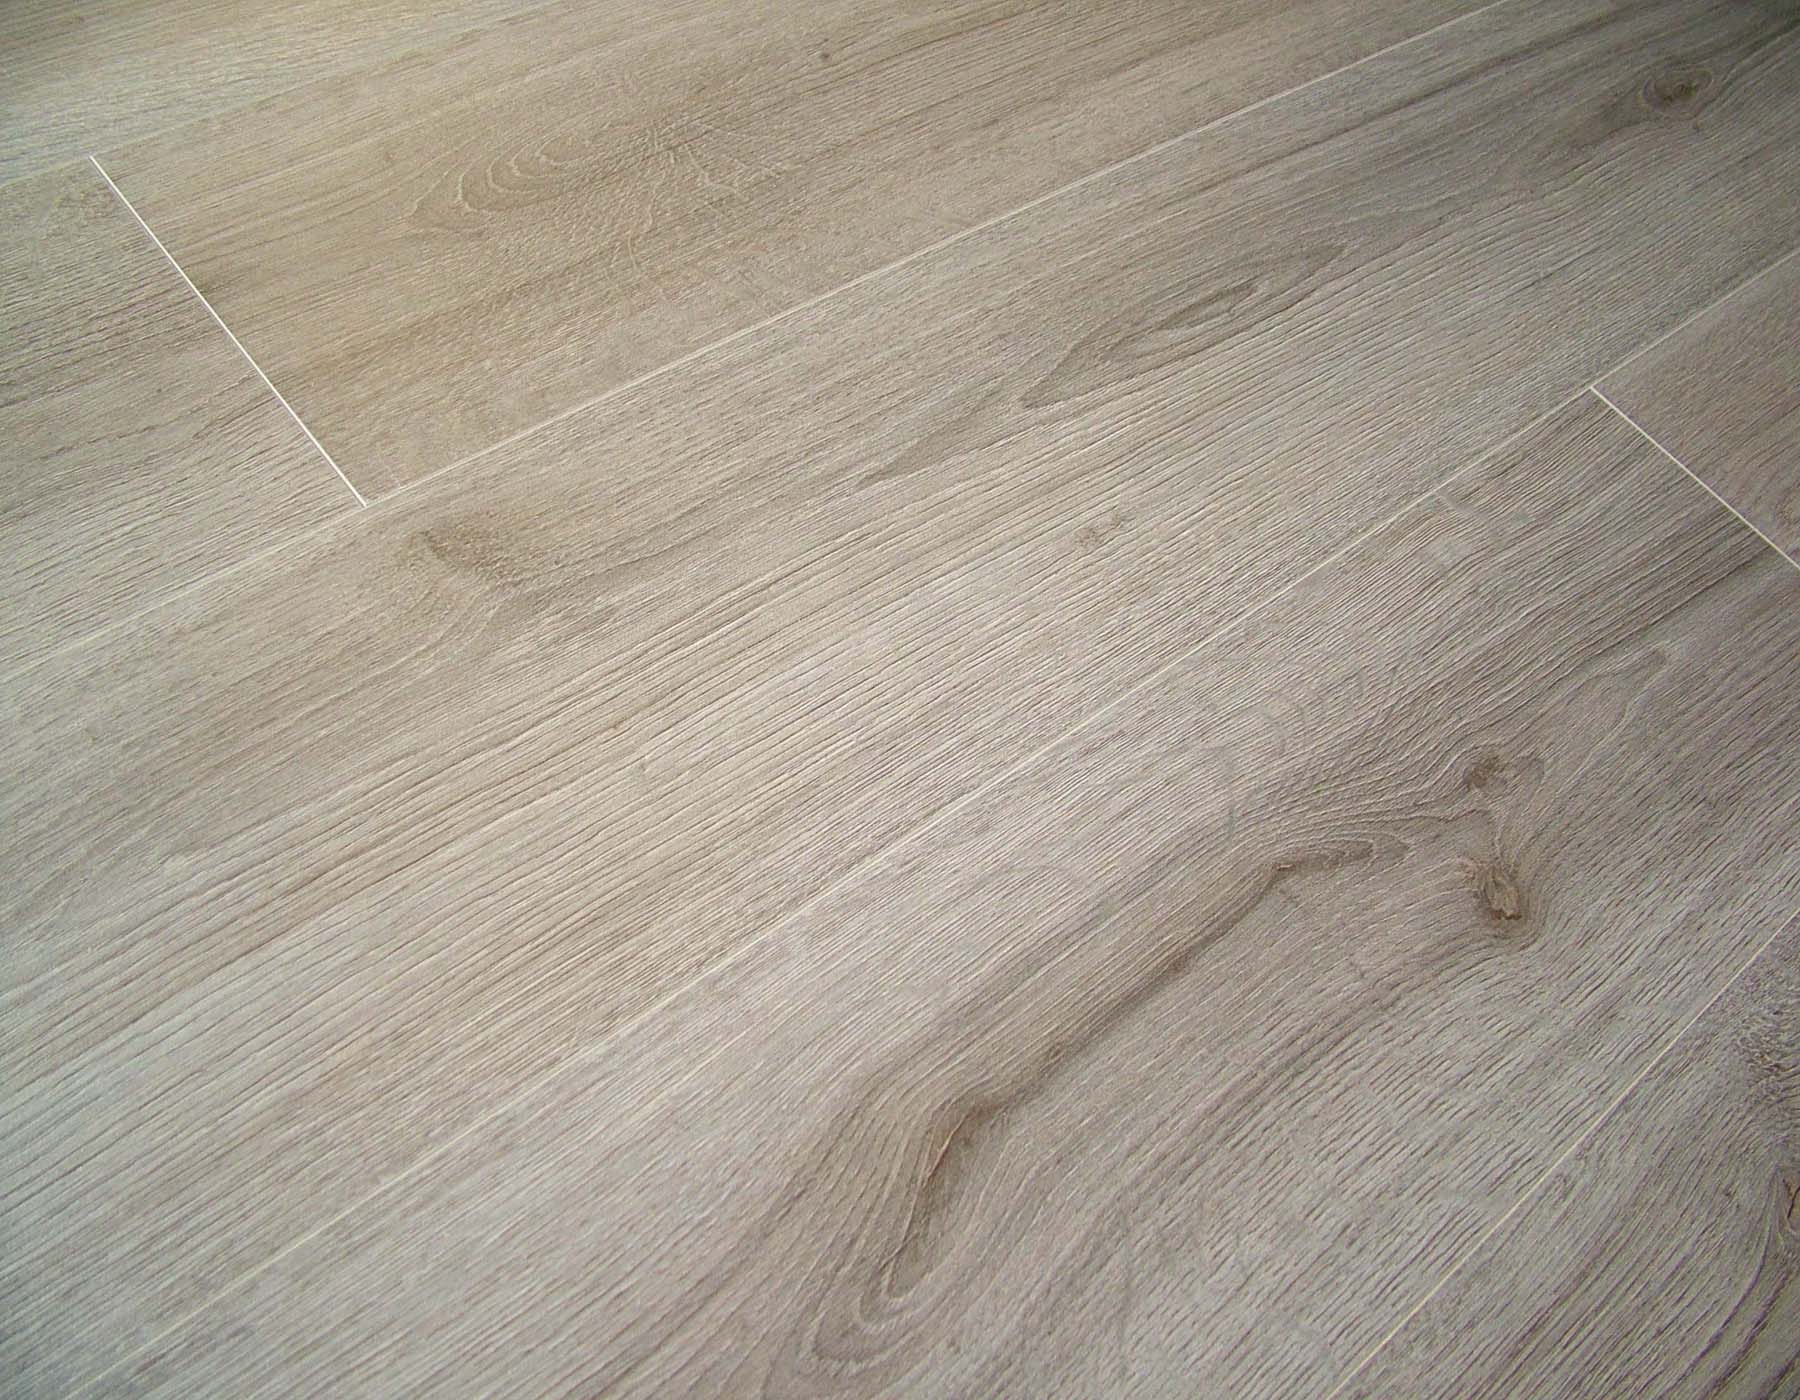 Kronotex Trend grey oak V-groove laminate flooring